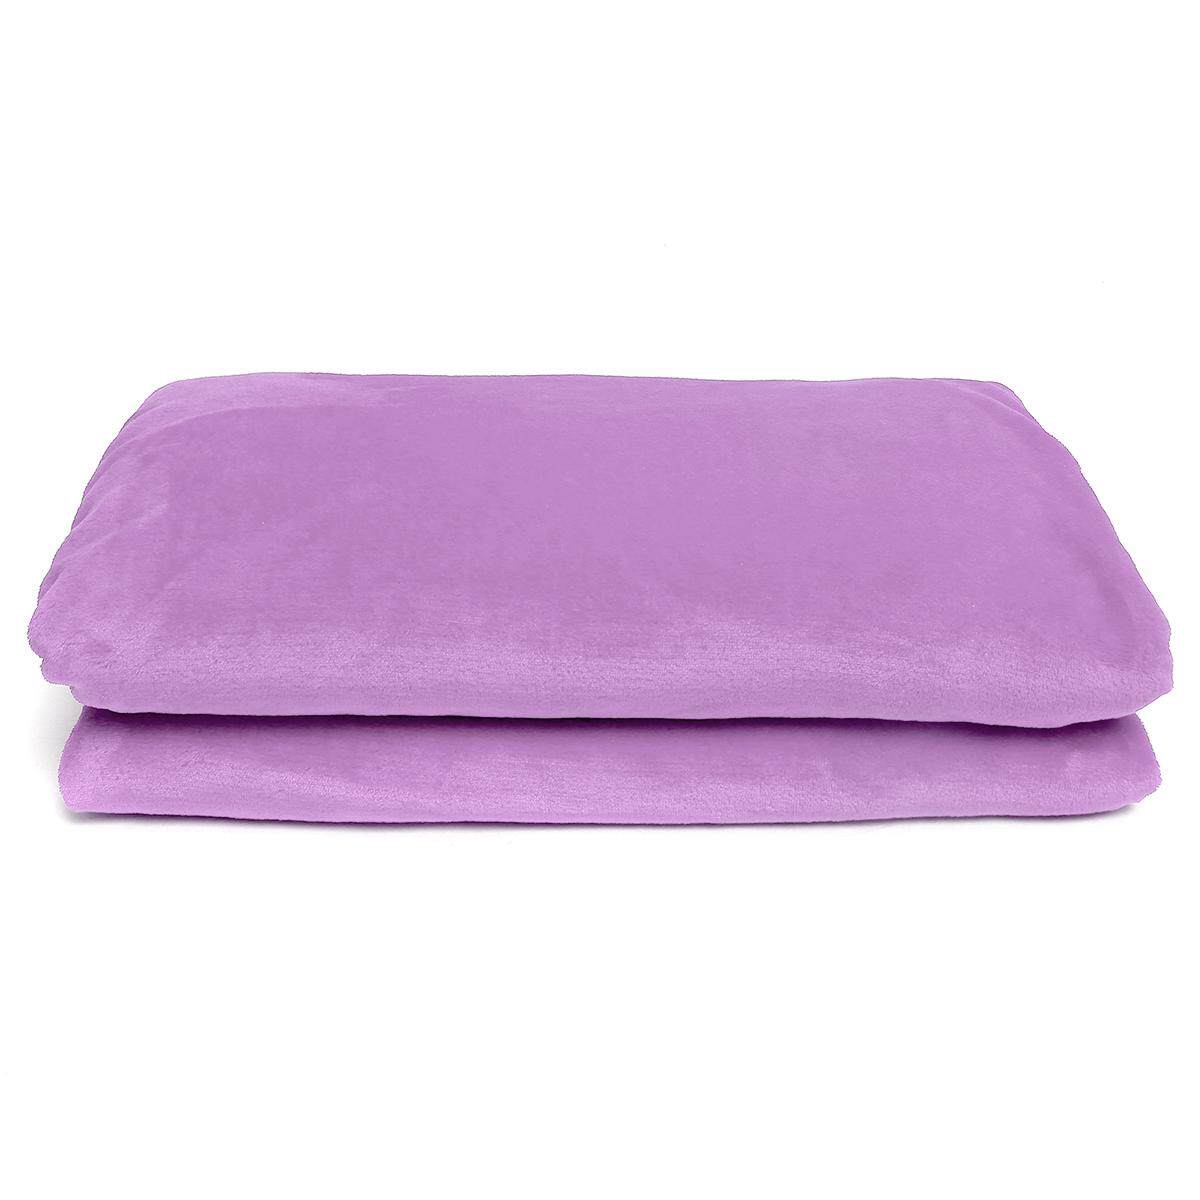 Solid Blanket Bedding Sofa Throw Fleece Queen Super Soft Warm Value Luxurious